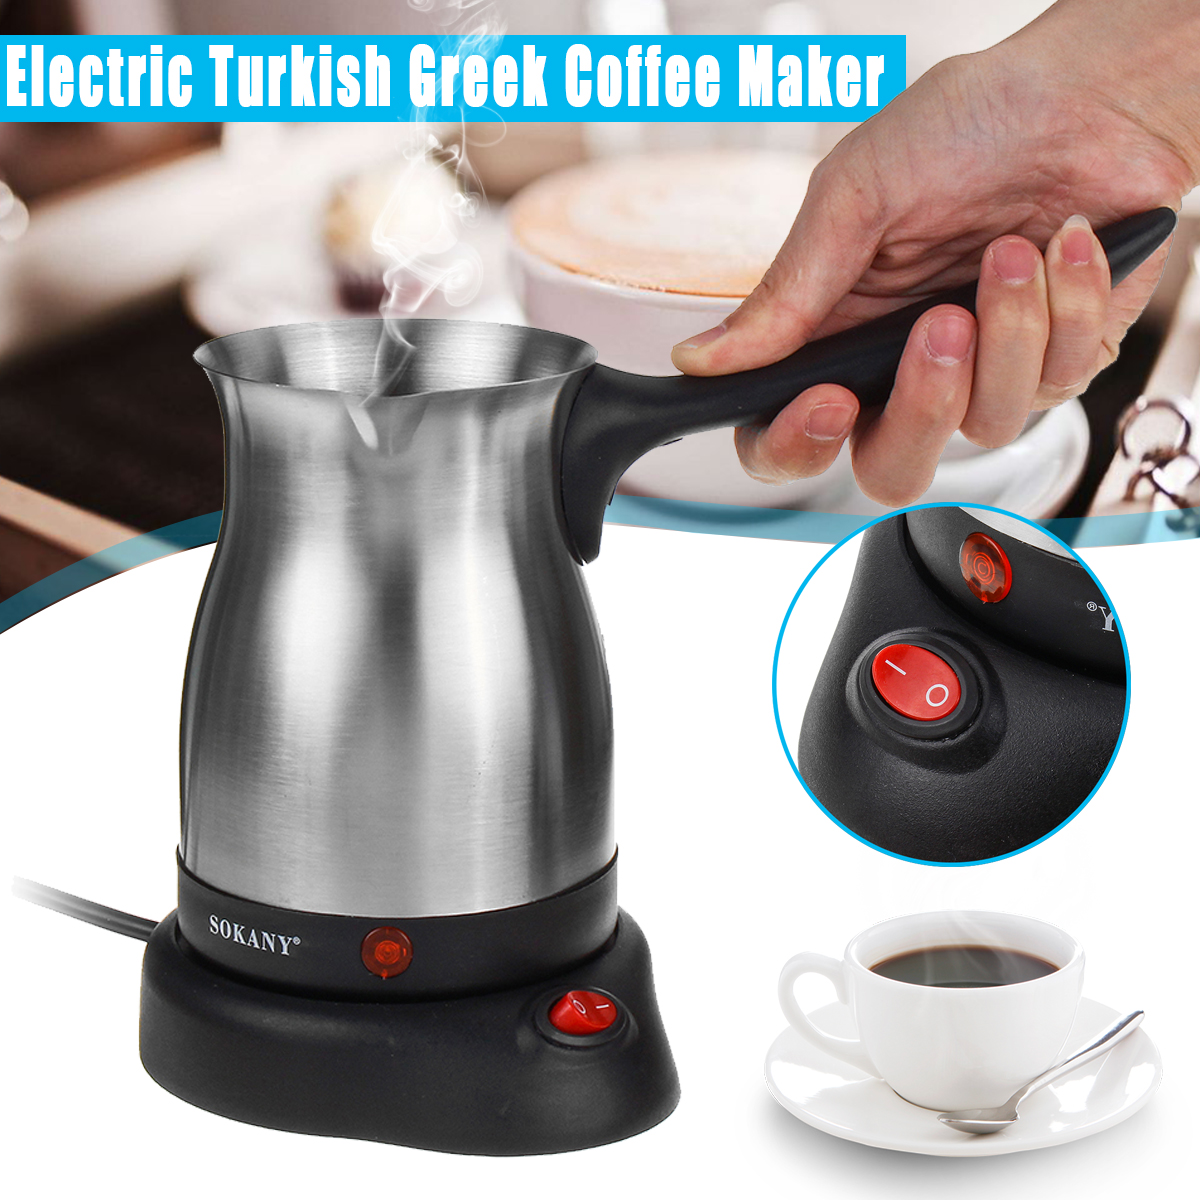 Stainless Steel Electric Turkish Greek Coffee Maker Machine Espresso Moka Pot 29